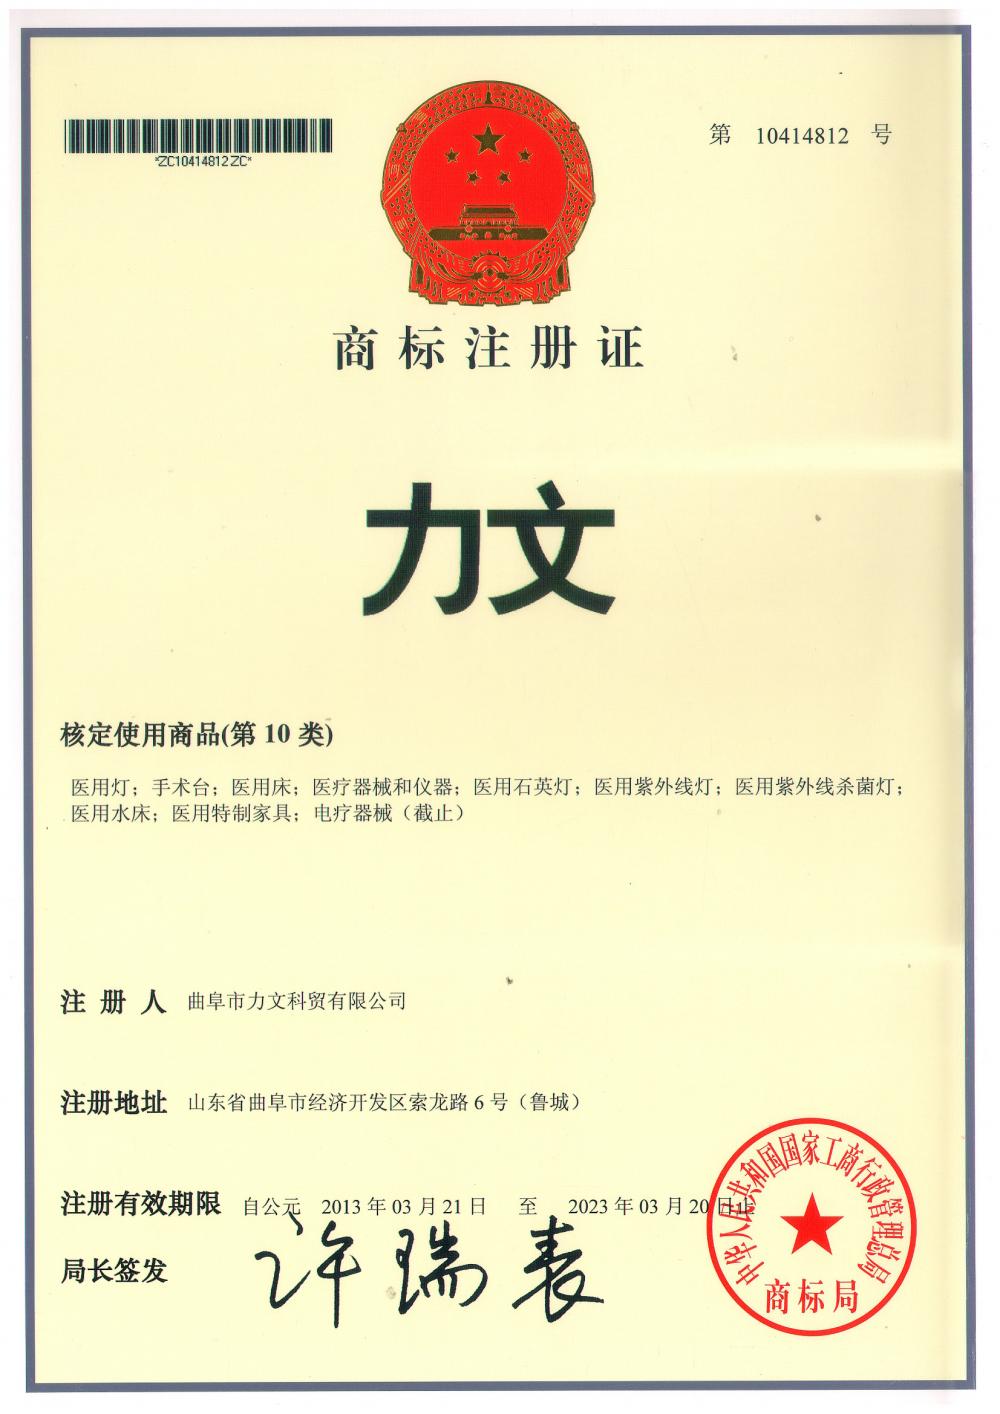 Trademark registration certificate